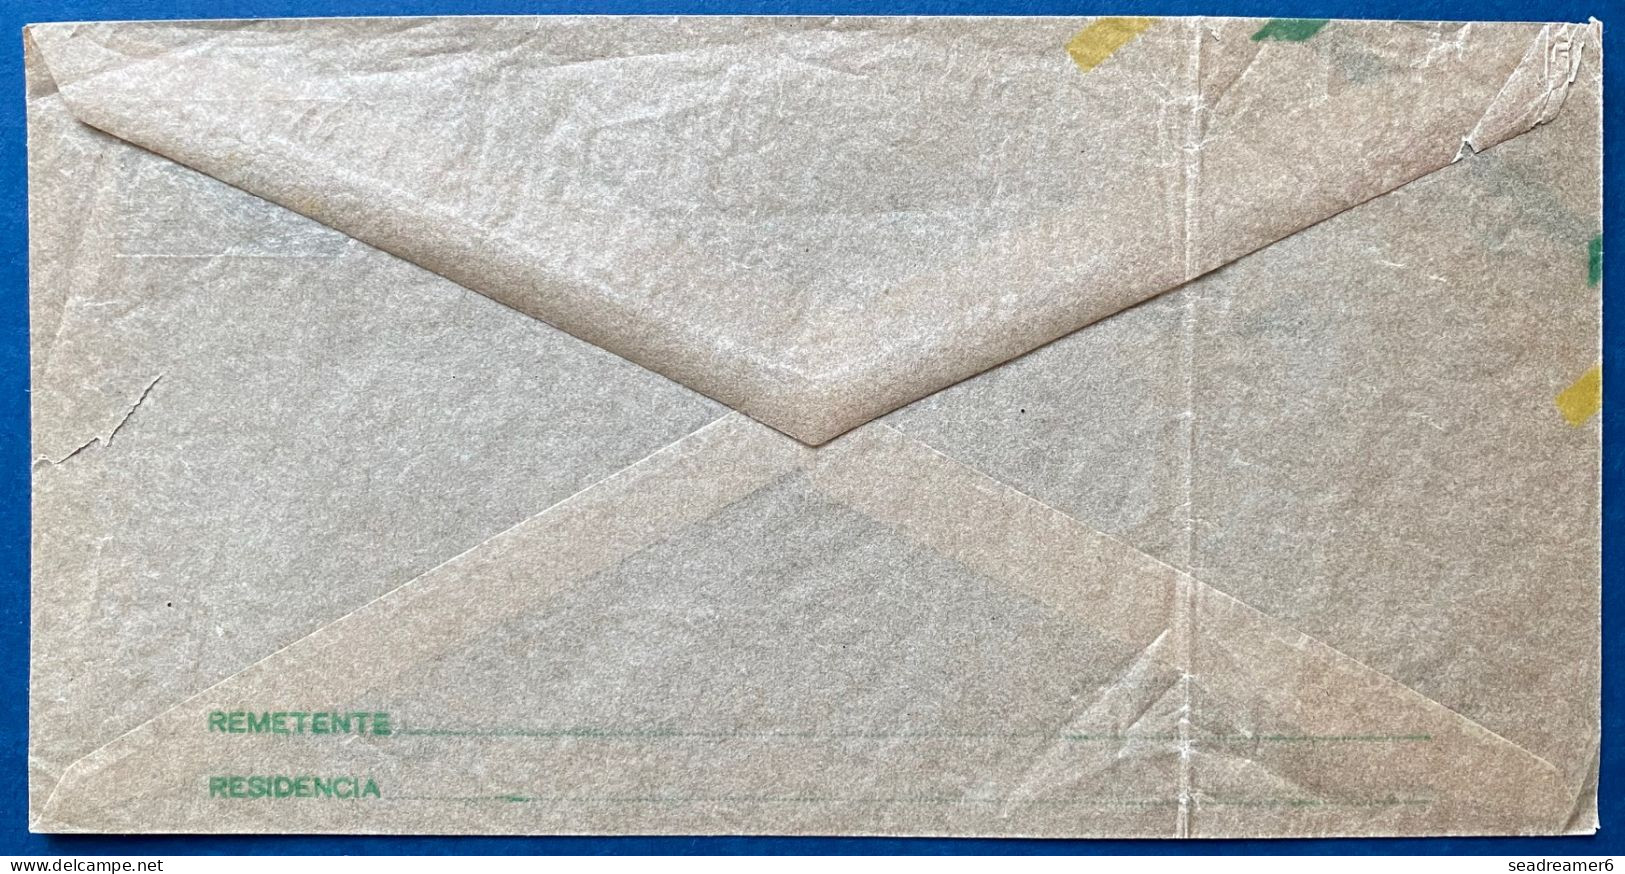 Brazil 1941 Registred Stationnery Letter Glassine Paper Of 2$000 Unused Translucent For Seing What Was Inside TTB - Luftpost